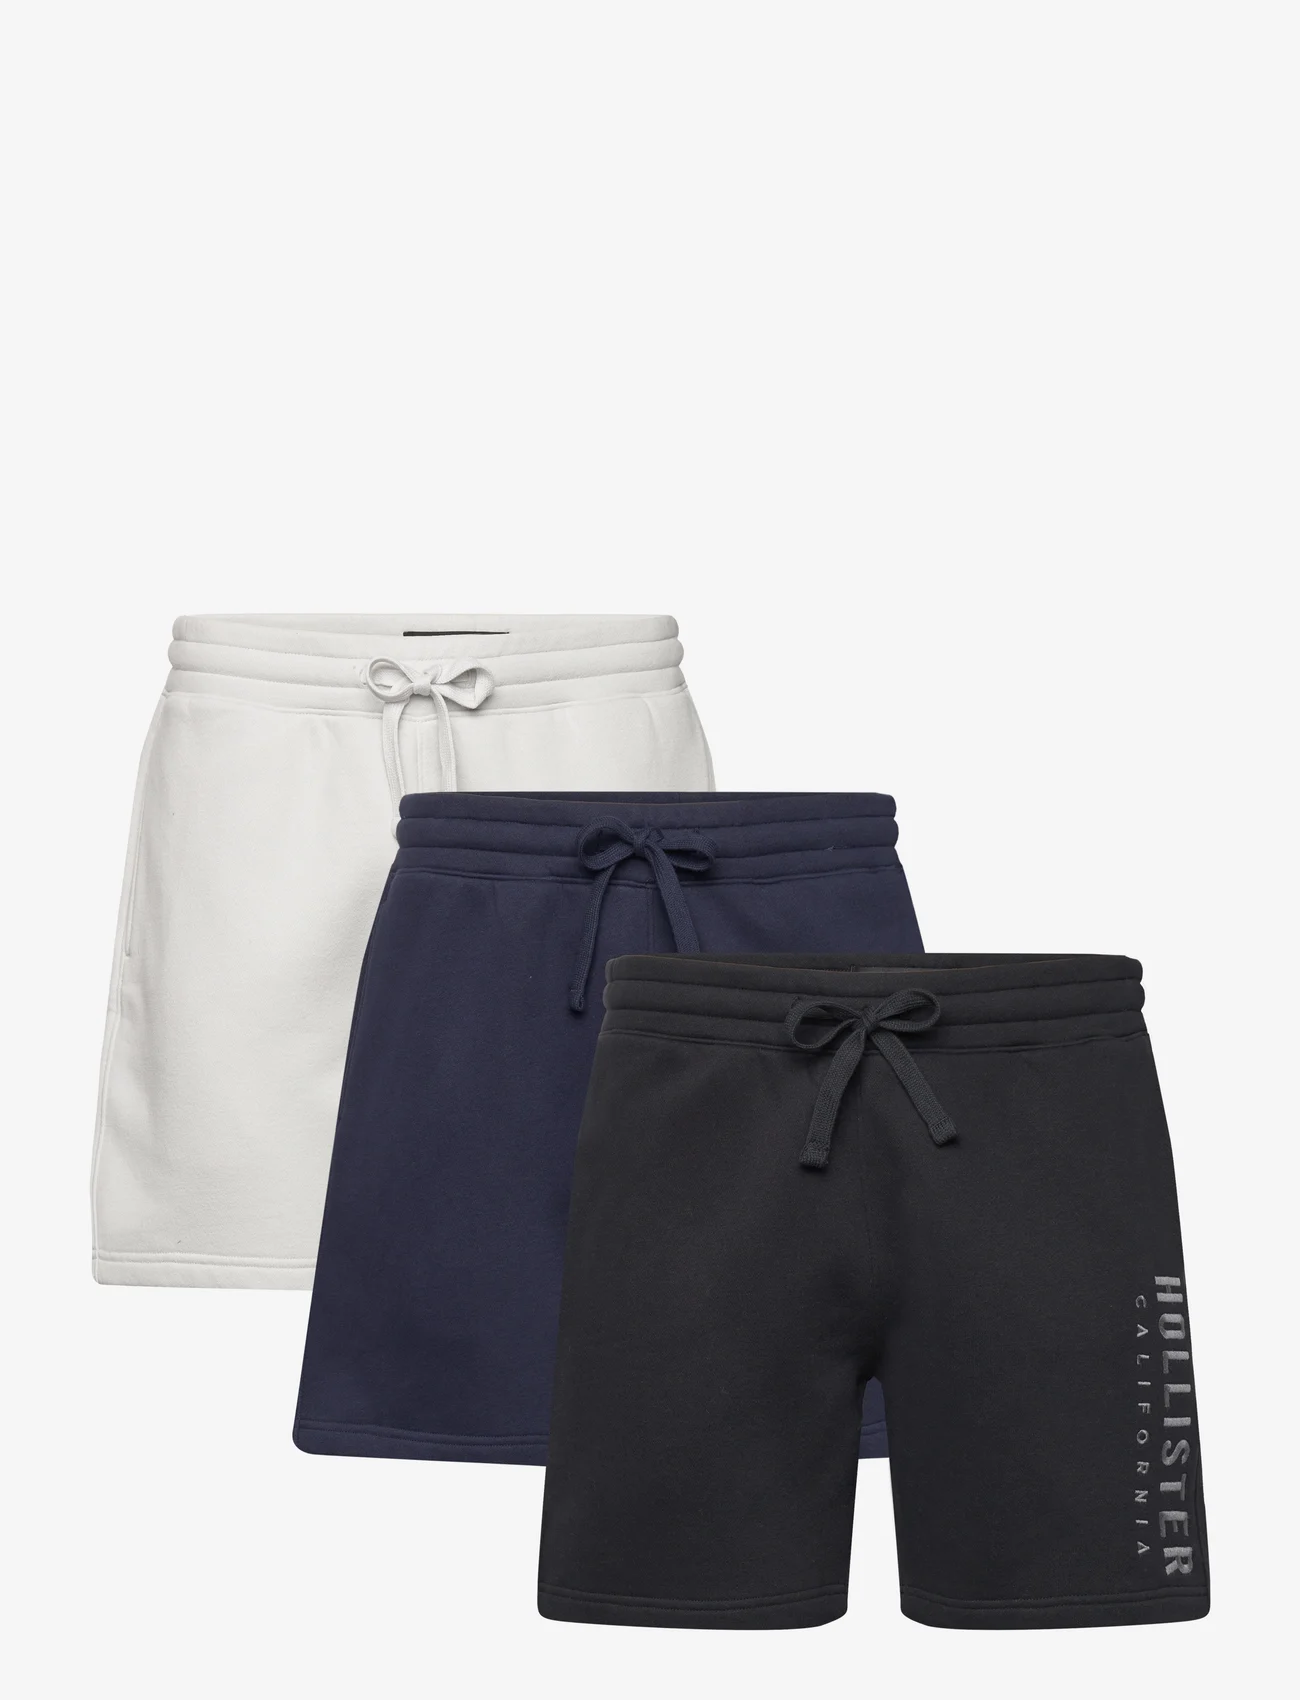 Hollister - HCo. GUYS SHORTS - chinos shorts - 3 pack tech logo - 0